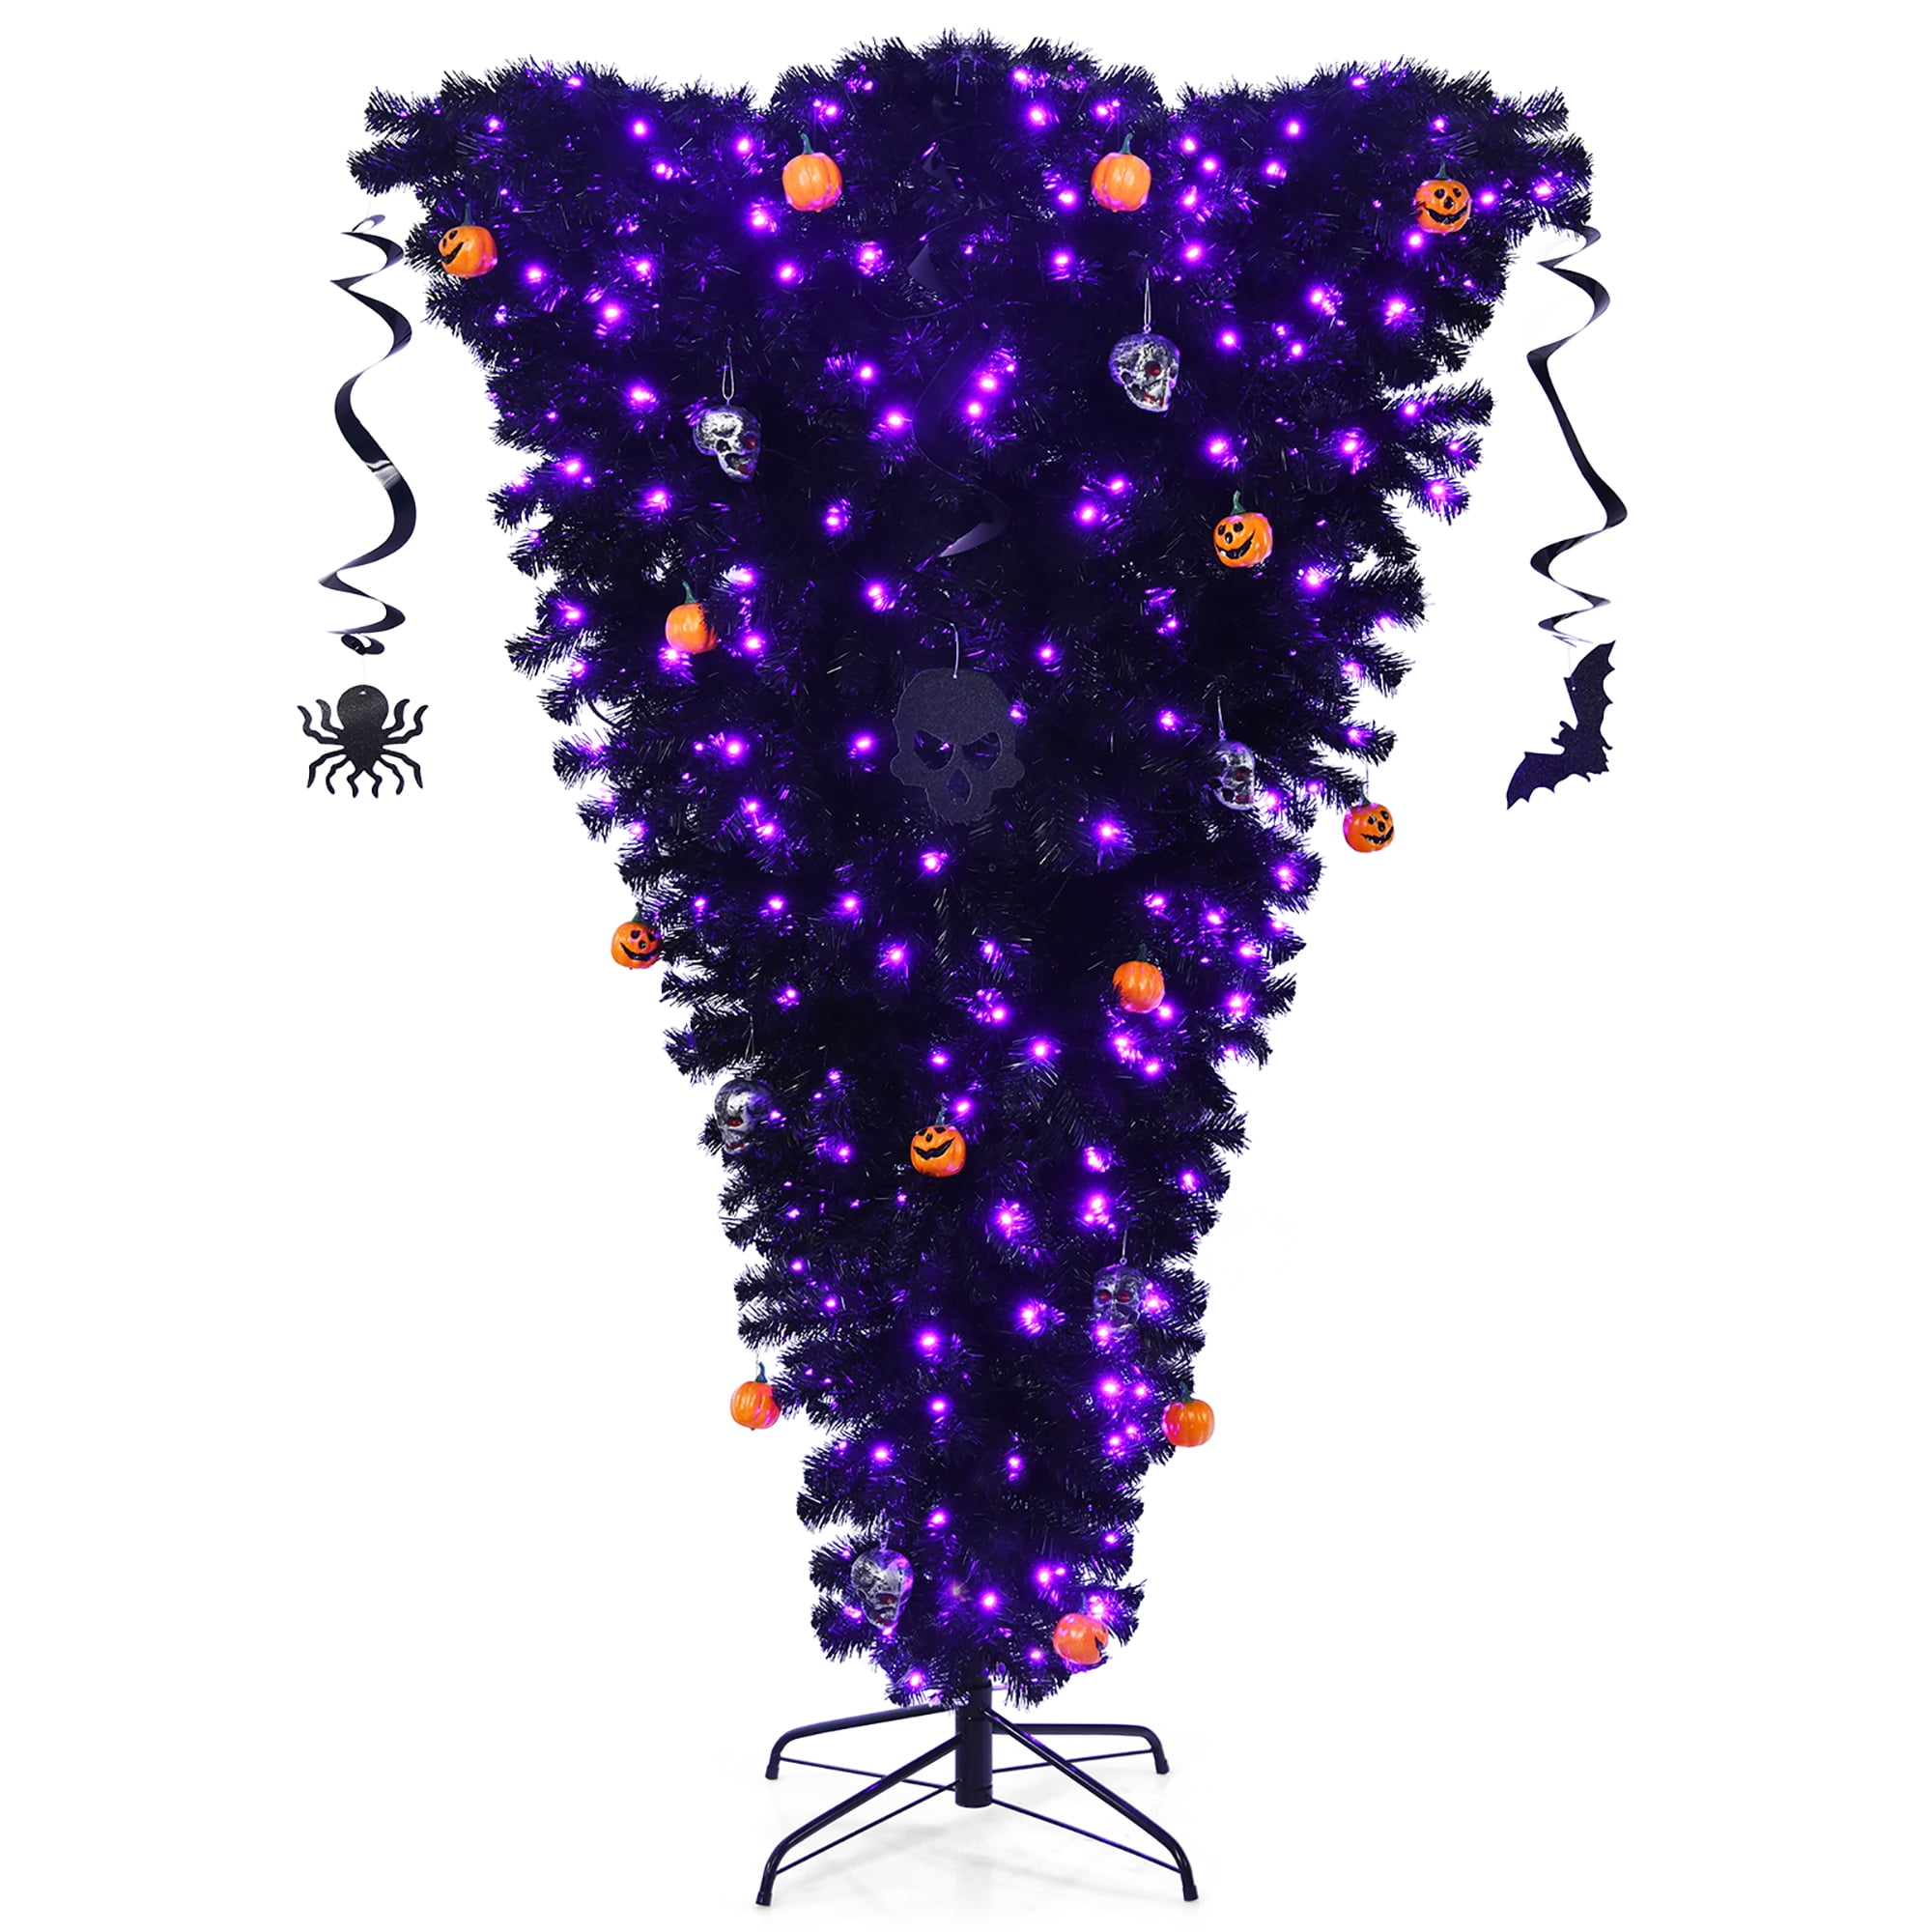 Costway 6ft Upside Down Christmas Halloween Tree Black w/270 Purple LED ...